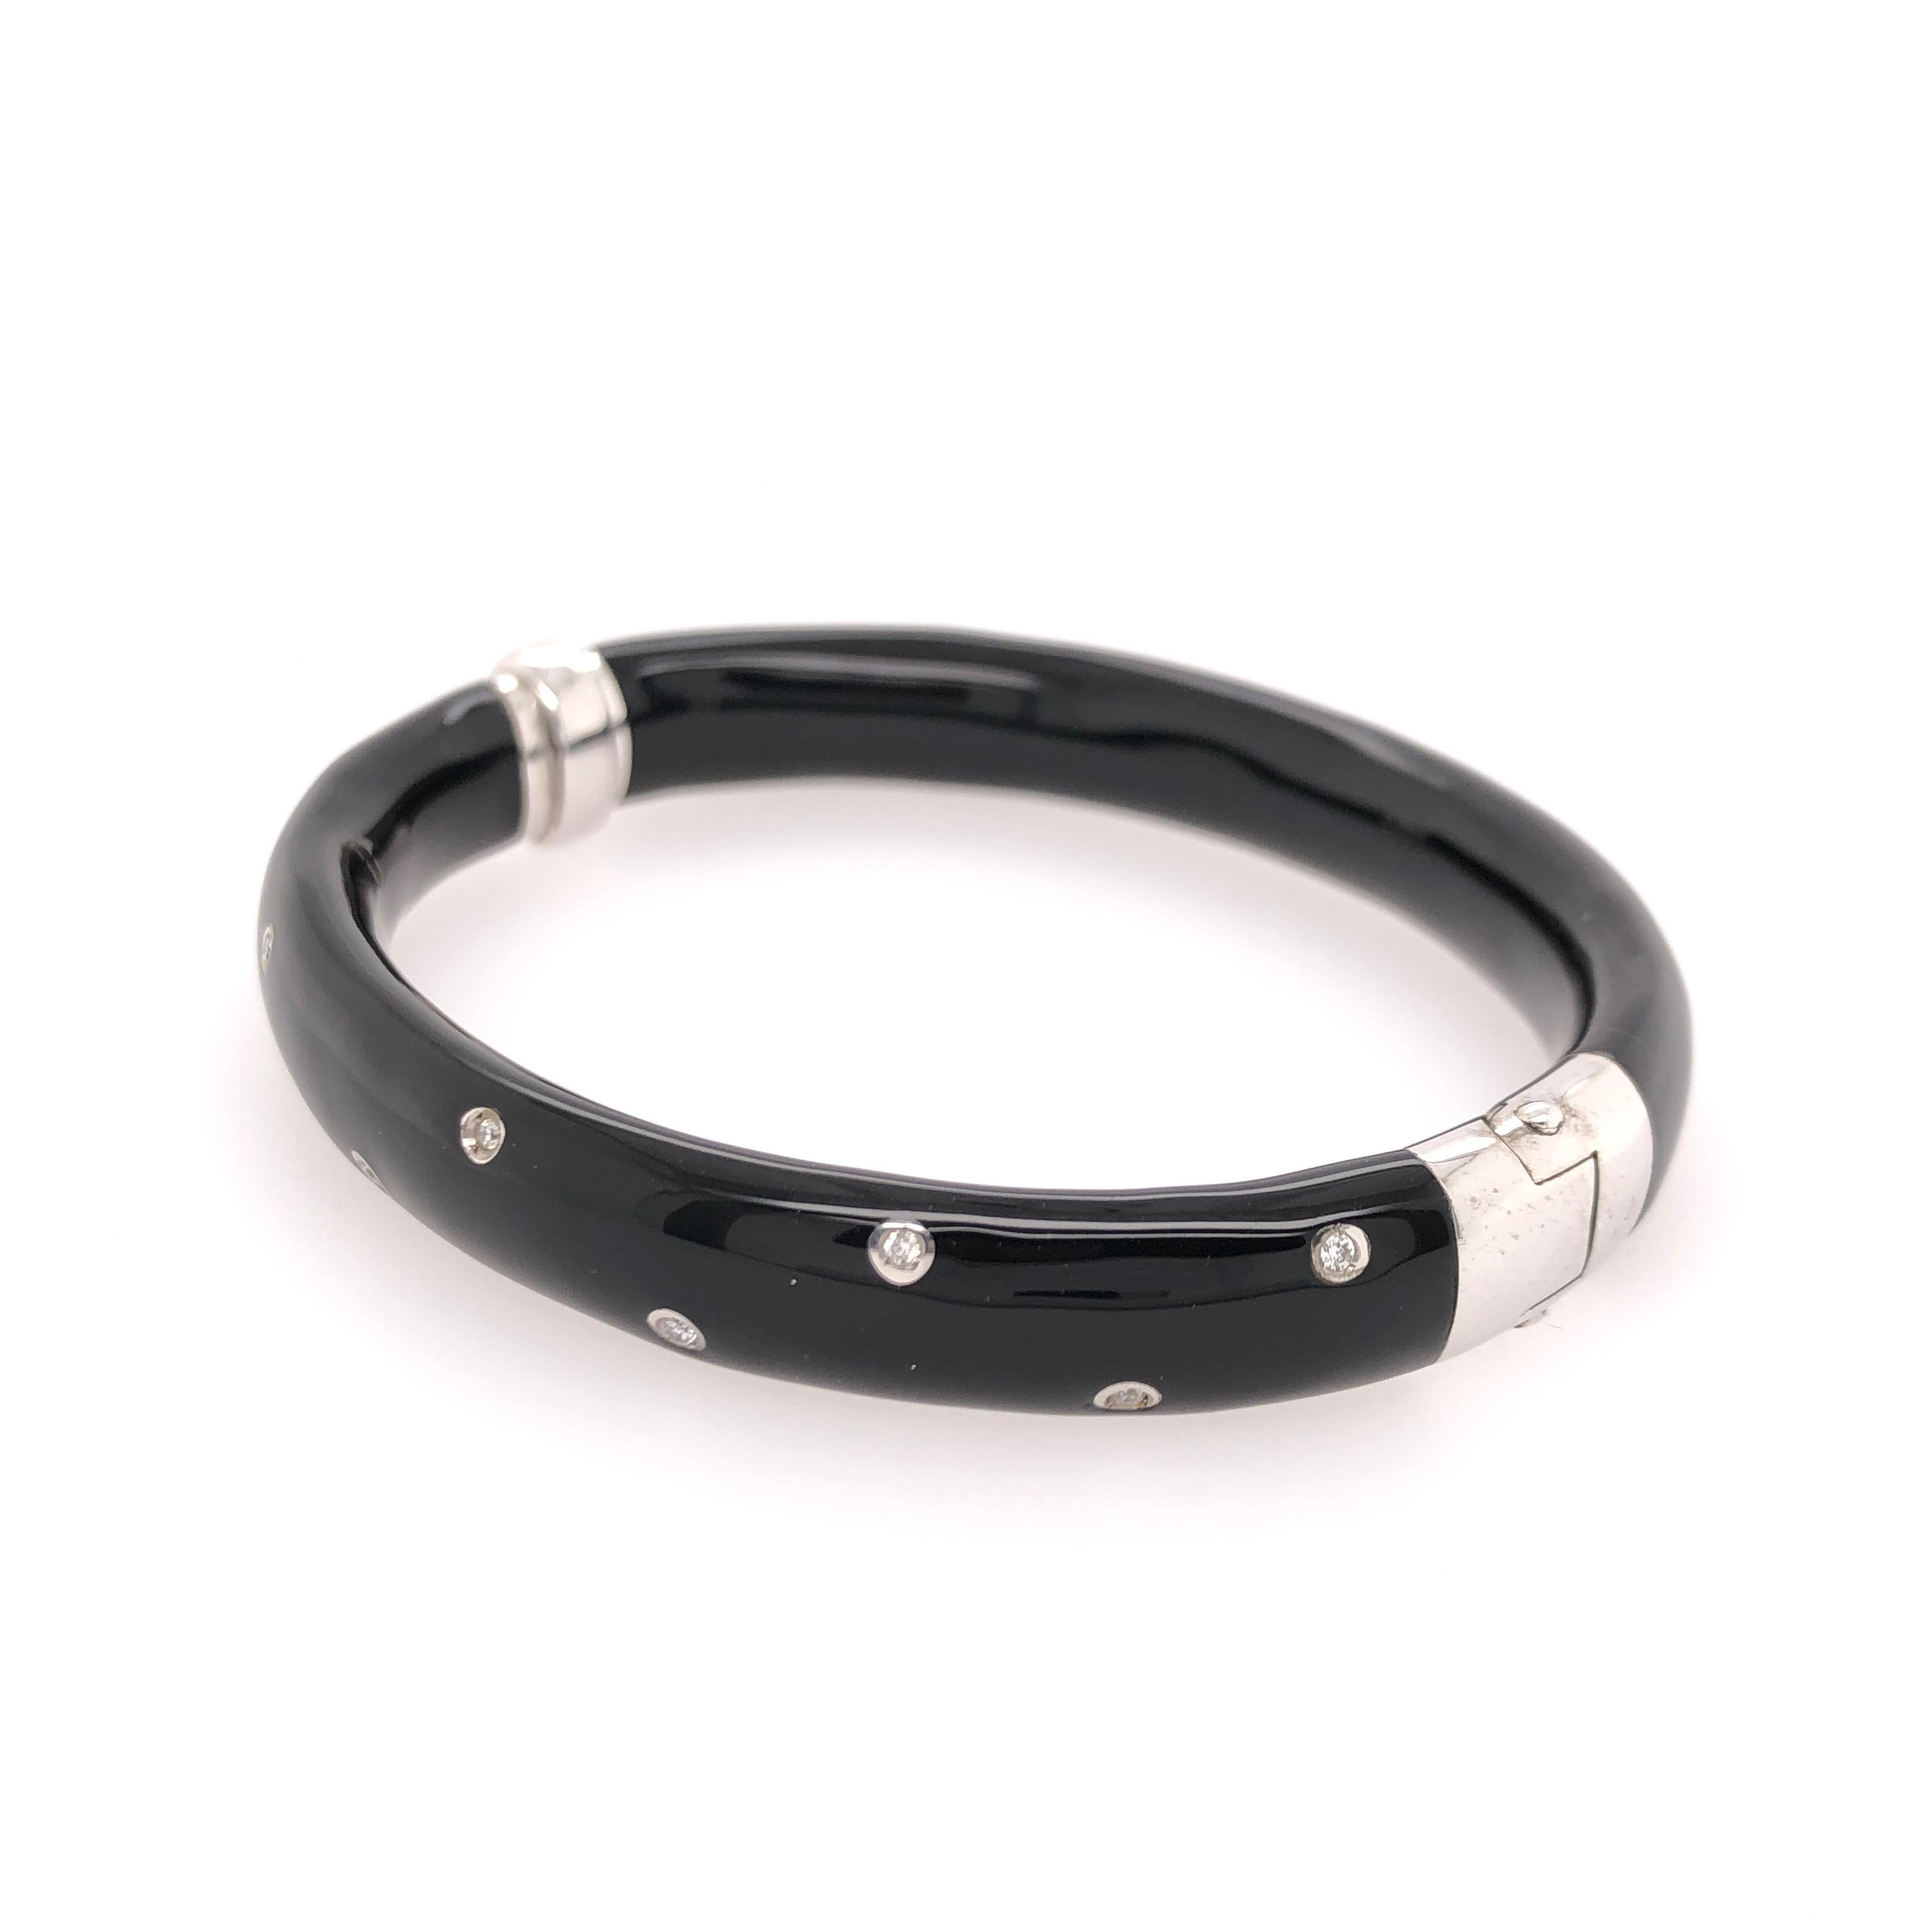 SOHO sterling silver black enamel bangle bracelet with diamonds.

Total diamond carat weight: 0.12 CT

Stamped: SOHO